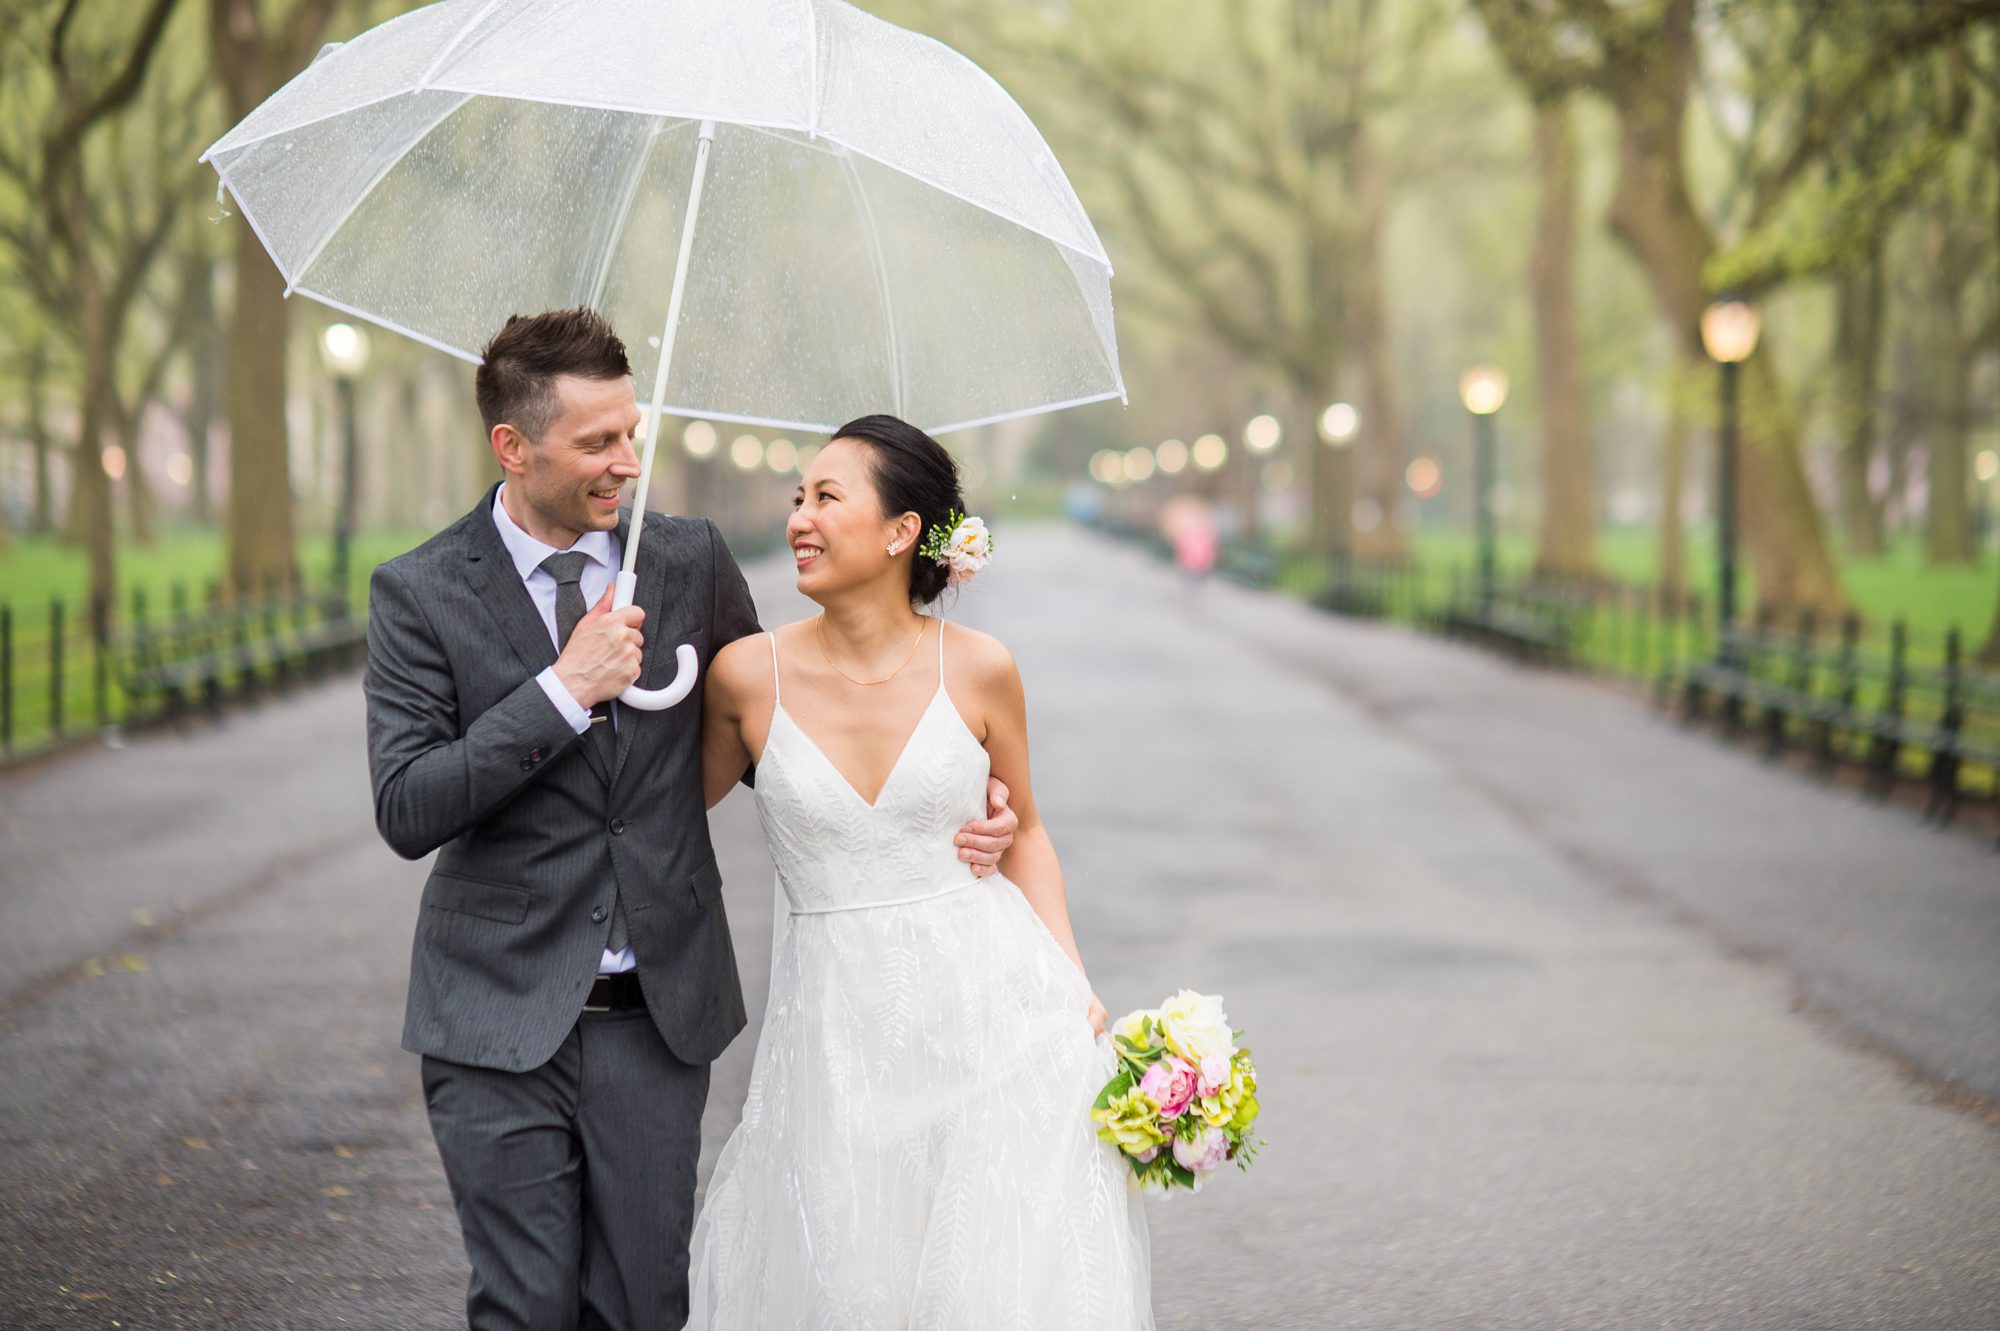 Wedding Photos in the Rain 